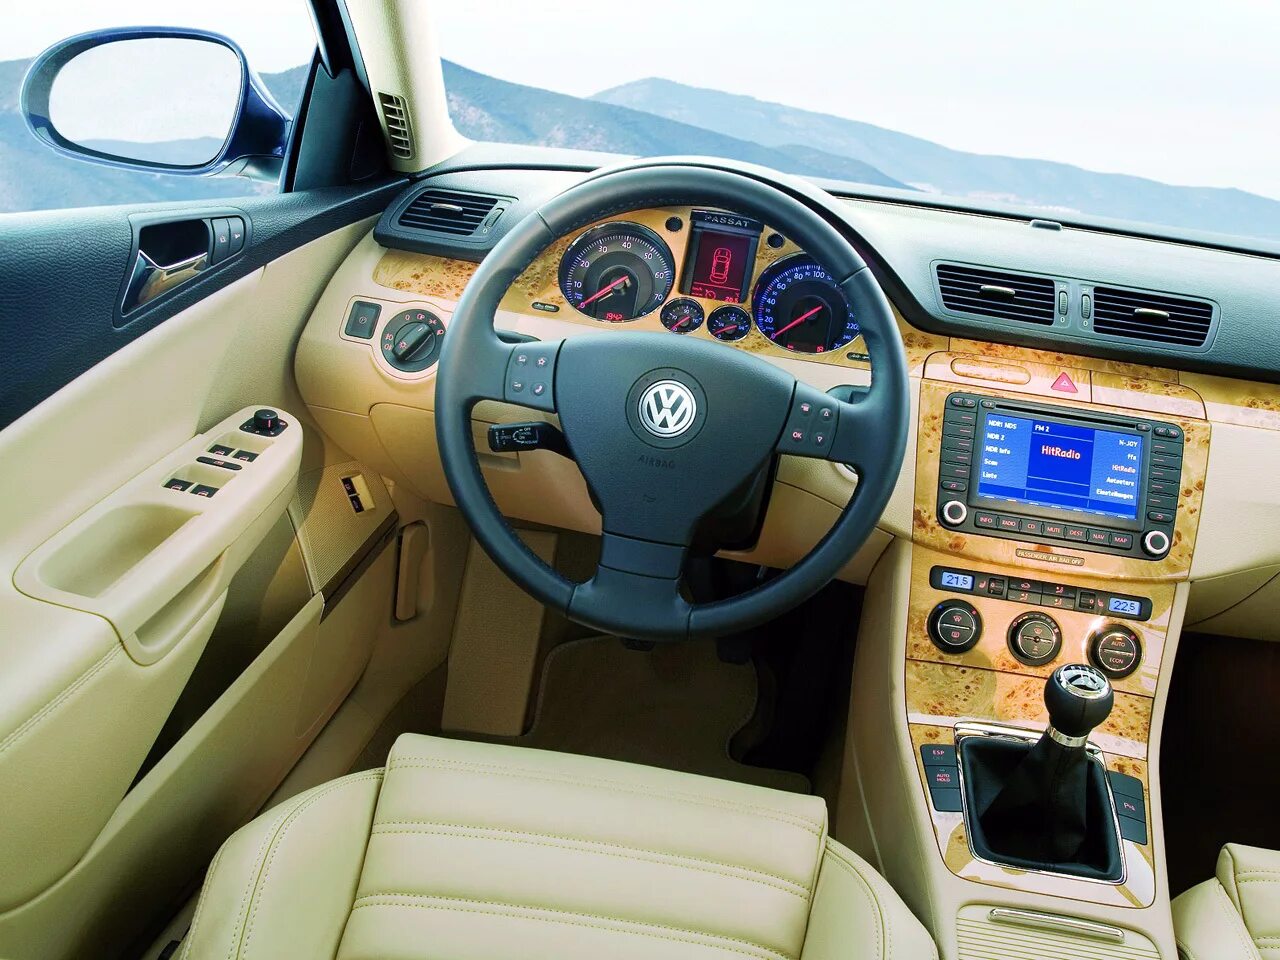 Фольксваген б6 1.6. Фольксваген Пассат b6 салон. Volkswagen Passat 2006 салон. Volkswagen Passat b6 салон. Volkswagen Passat 2005 Interior.